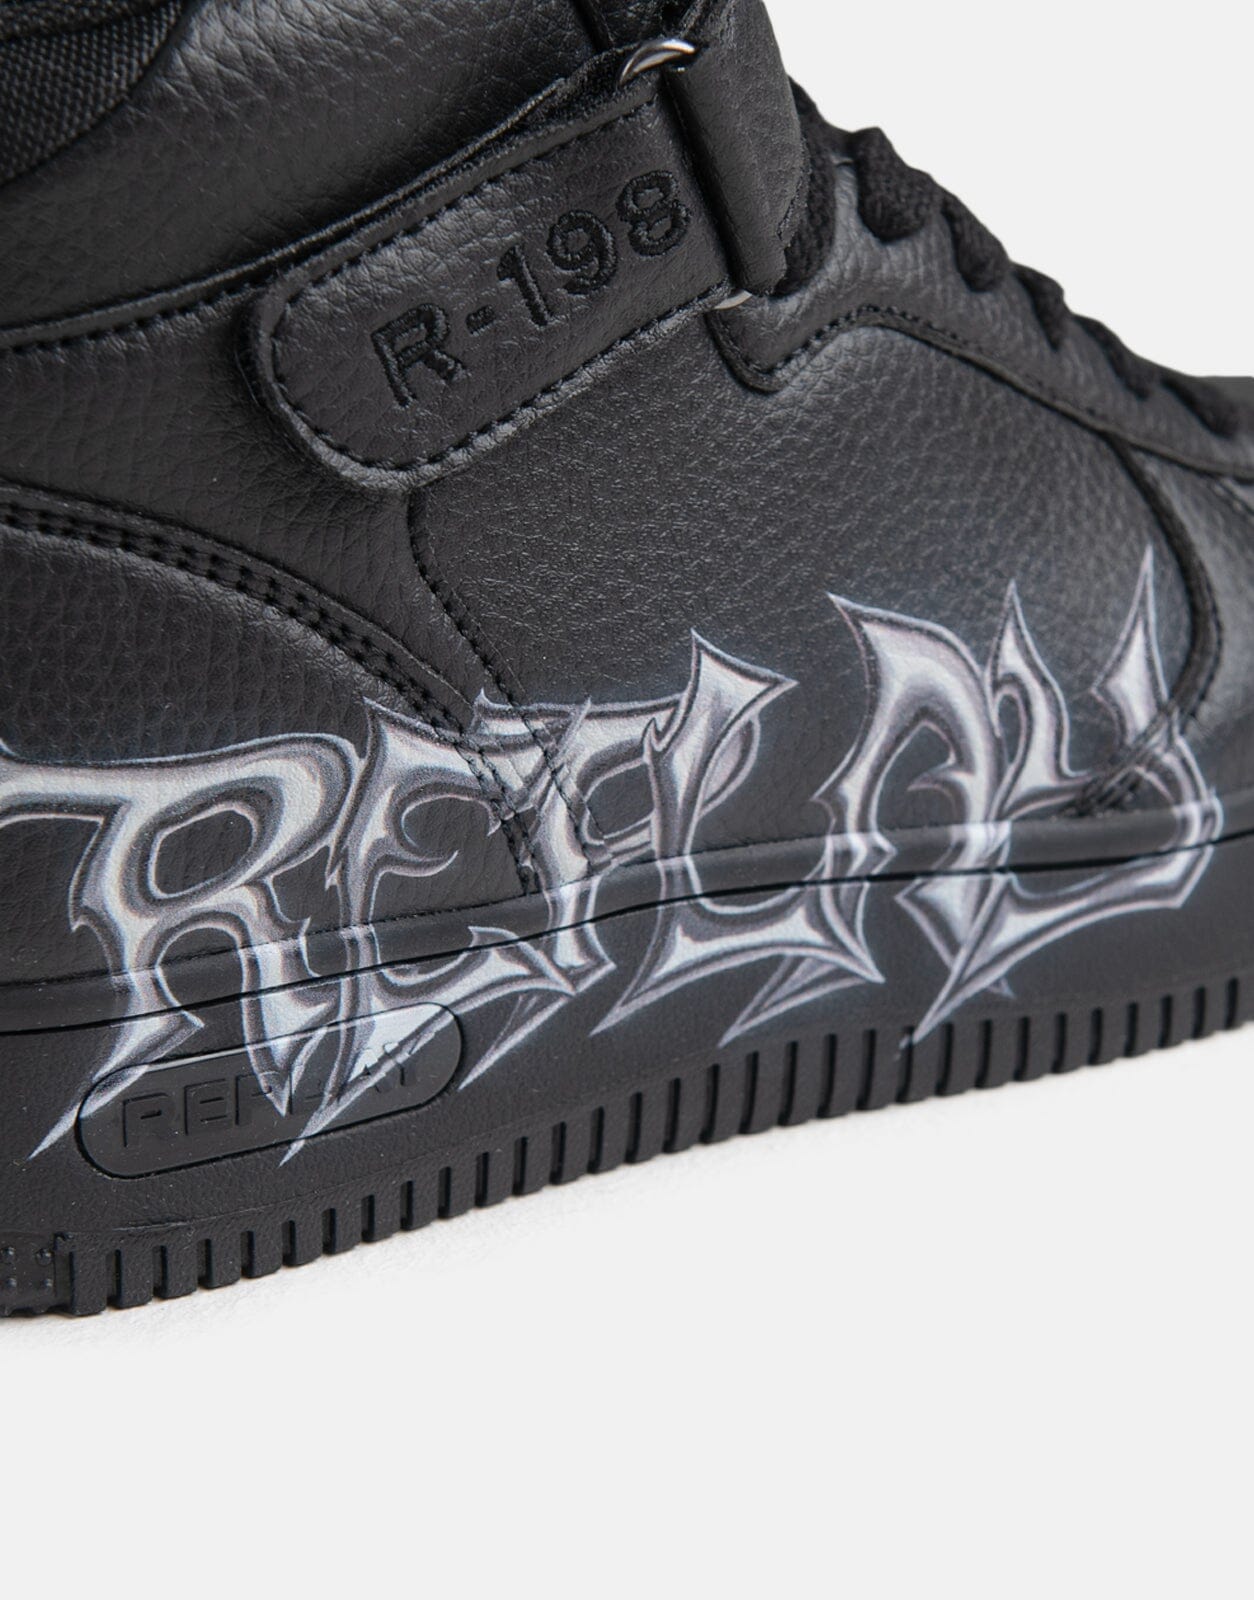 Replay Epic M Graffiti Mid Sneakers - Subwear